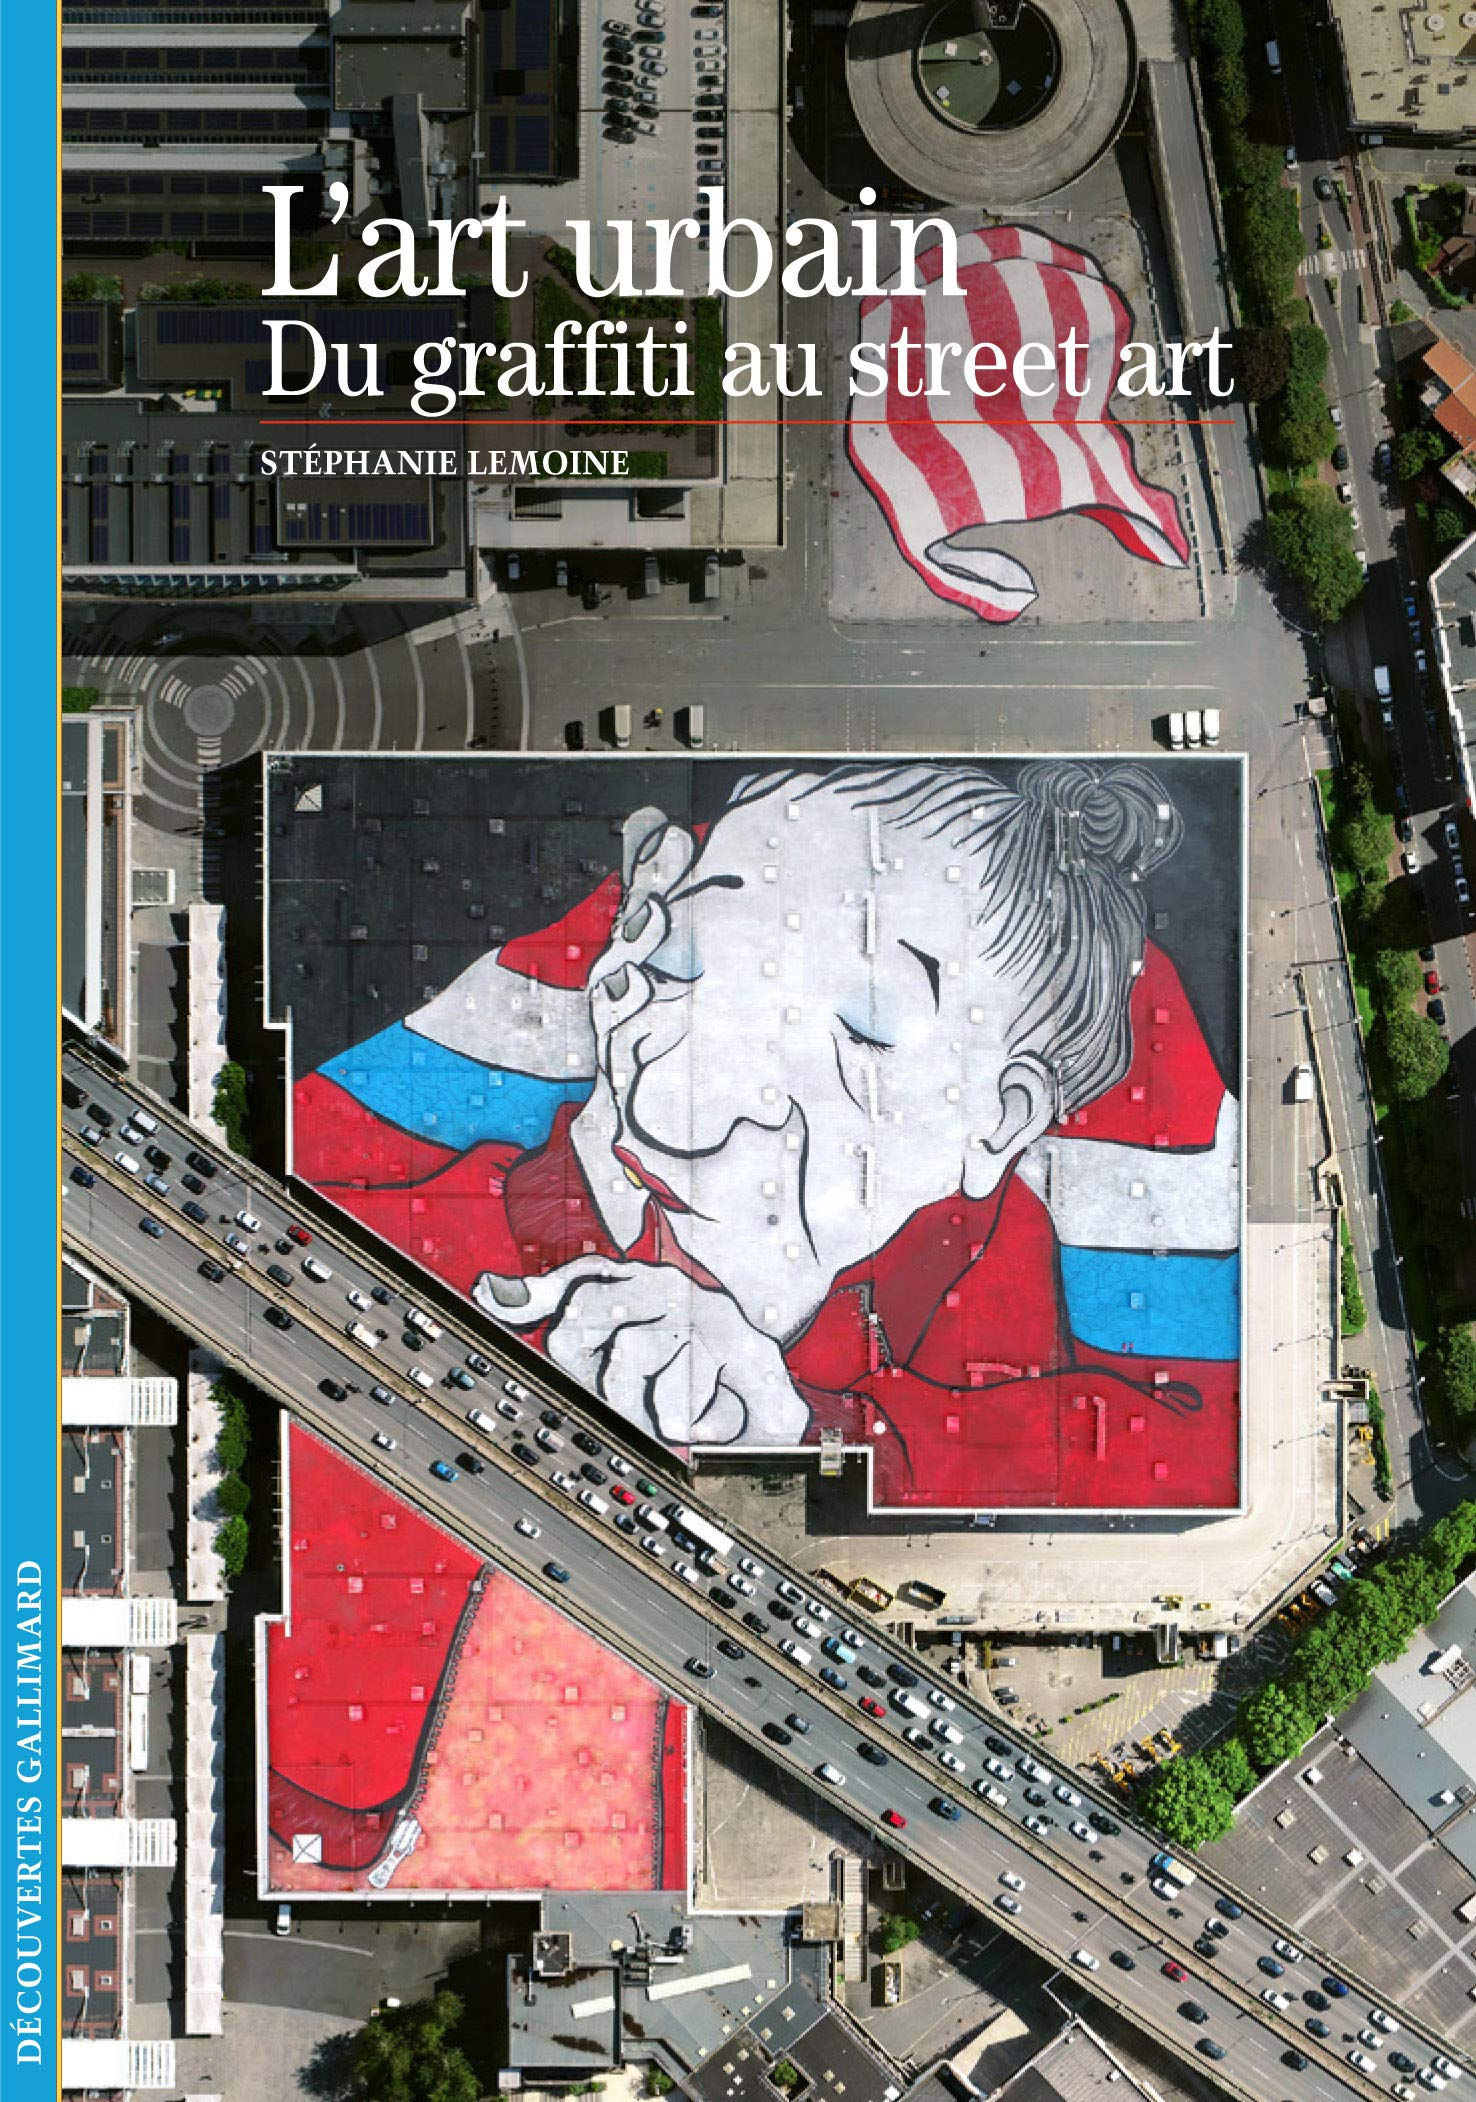 L'art urbain : du graffiti au street art